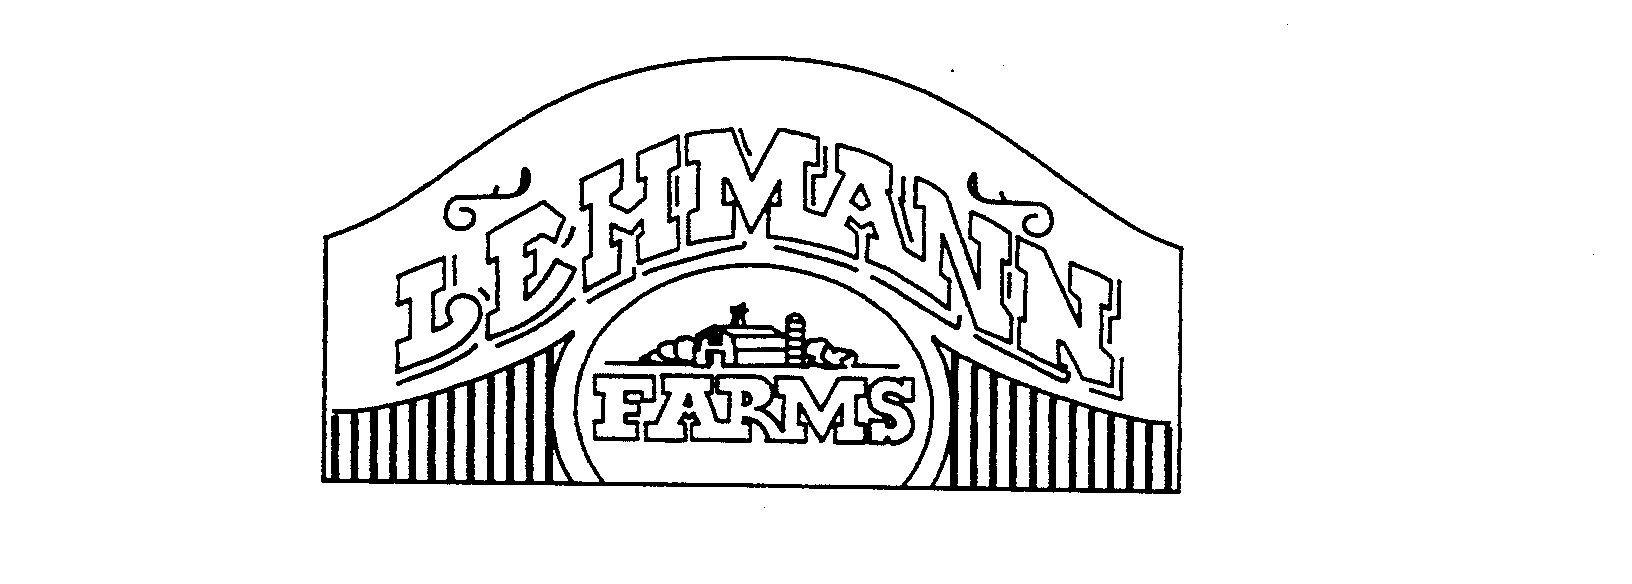 LEHMANN FARMS